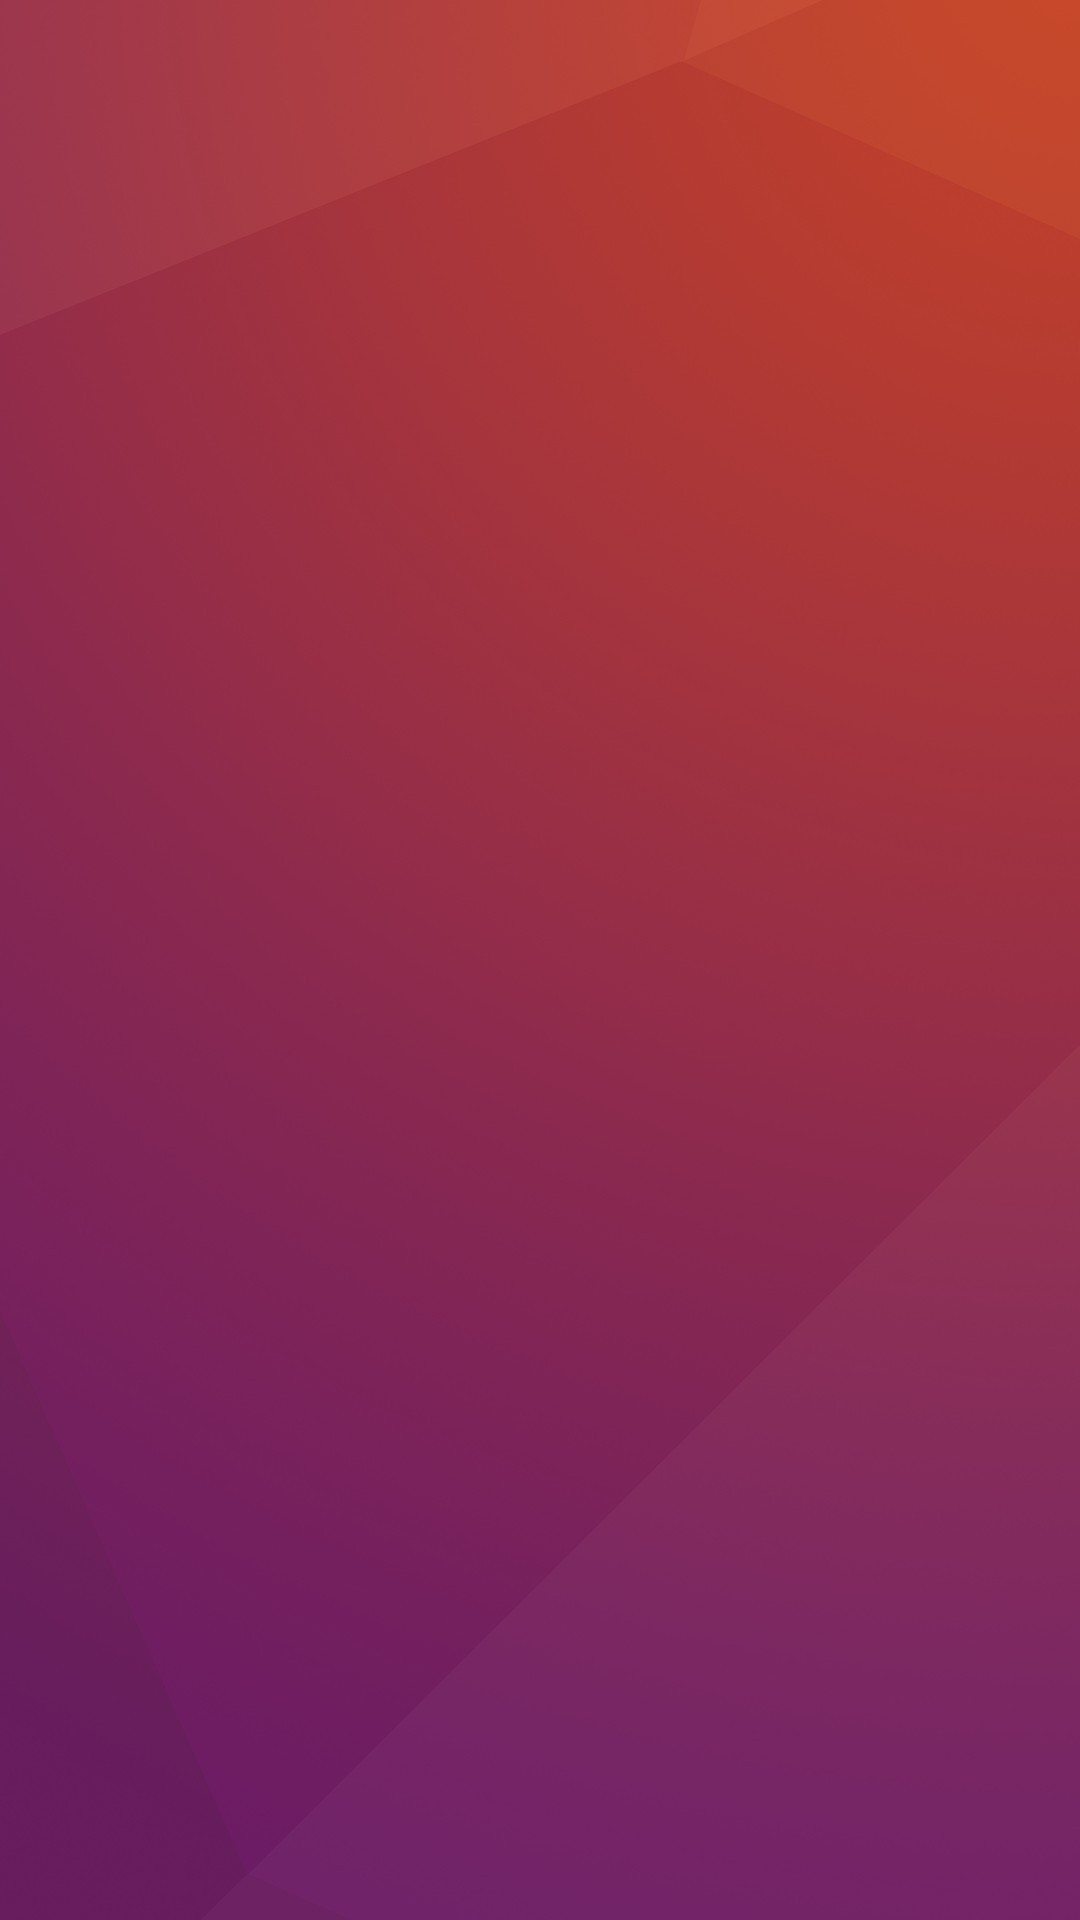 ubuntuの壁紙,赤,ピンク,バイオレット,紫の,ライラック